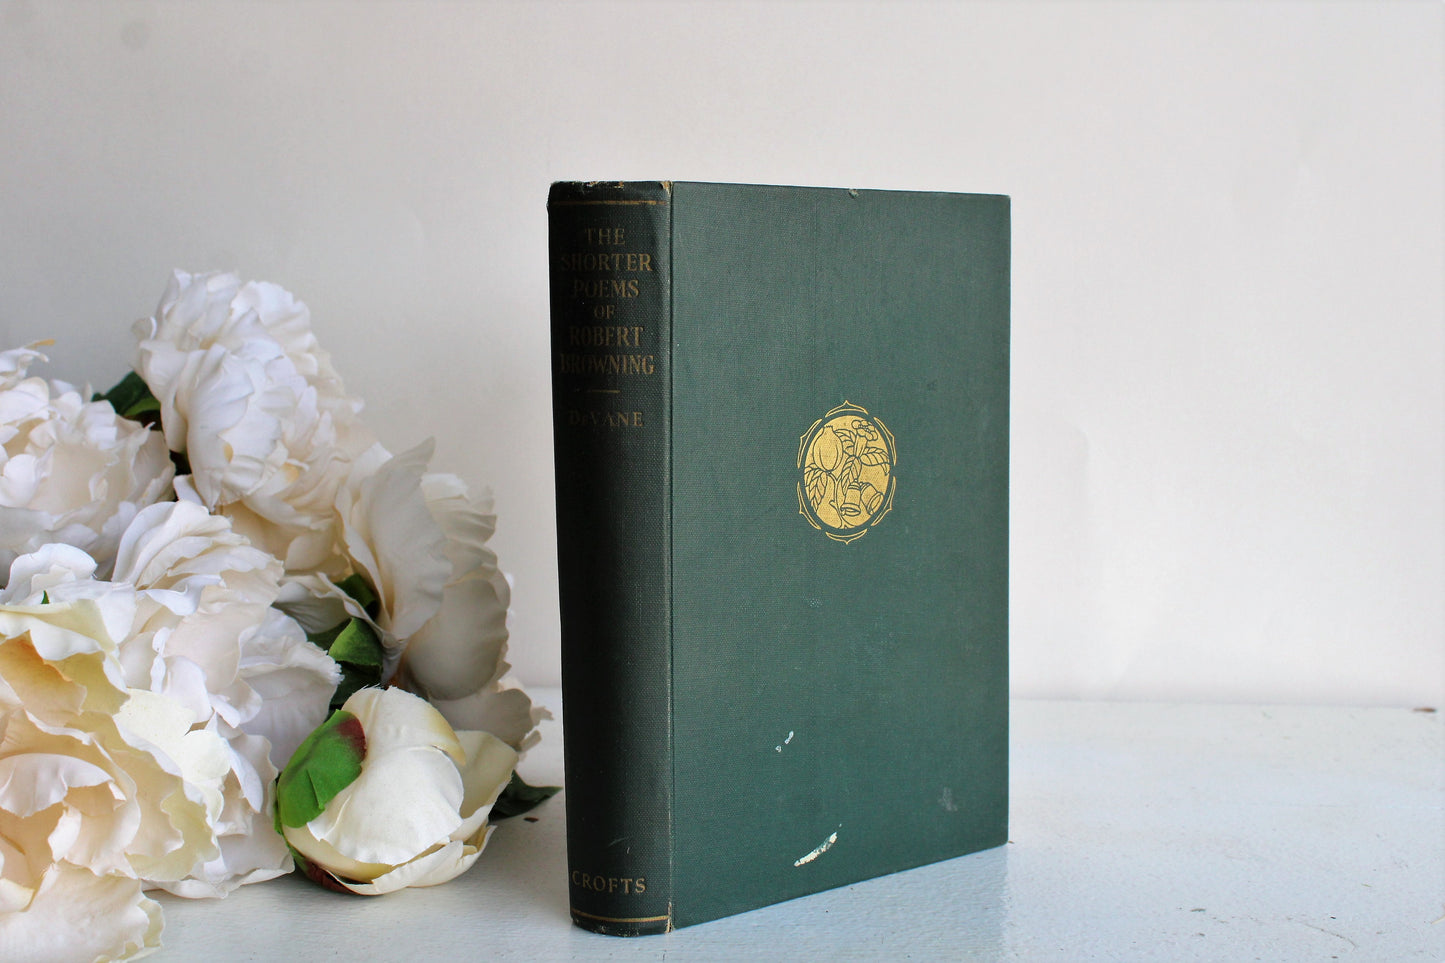 Vintage 1940s Book of Robert Browning Short Poems